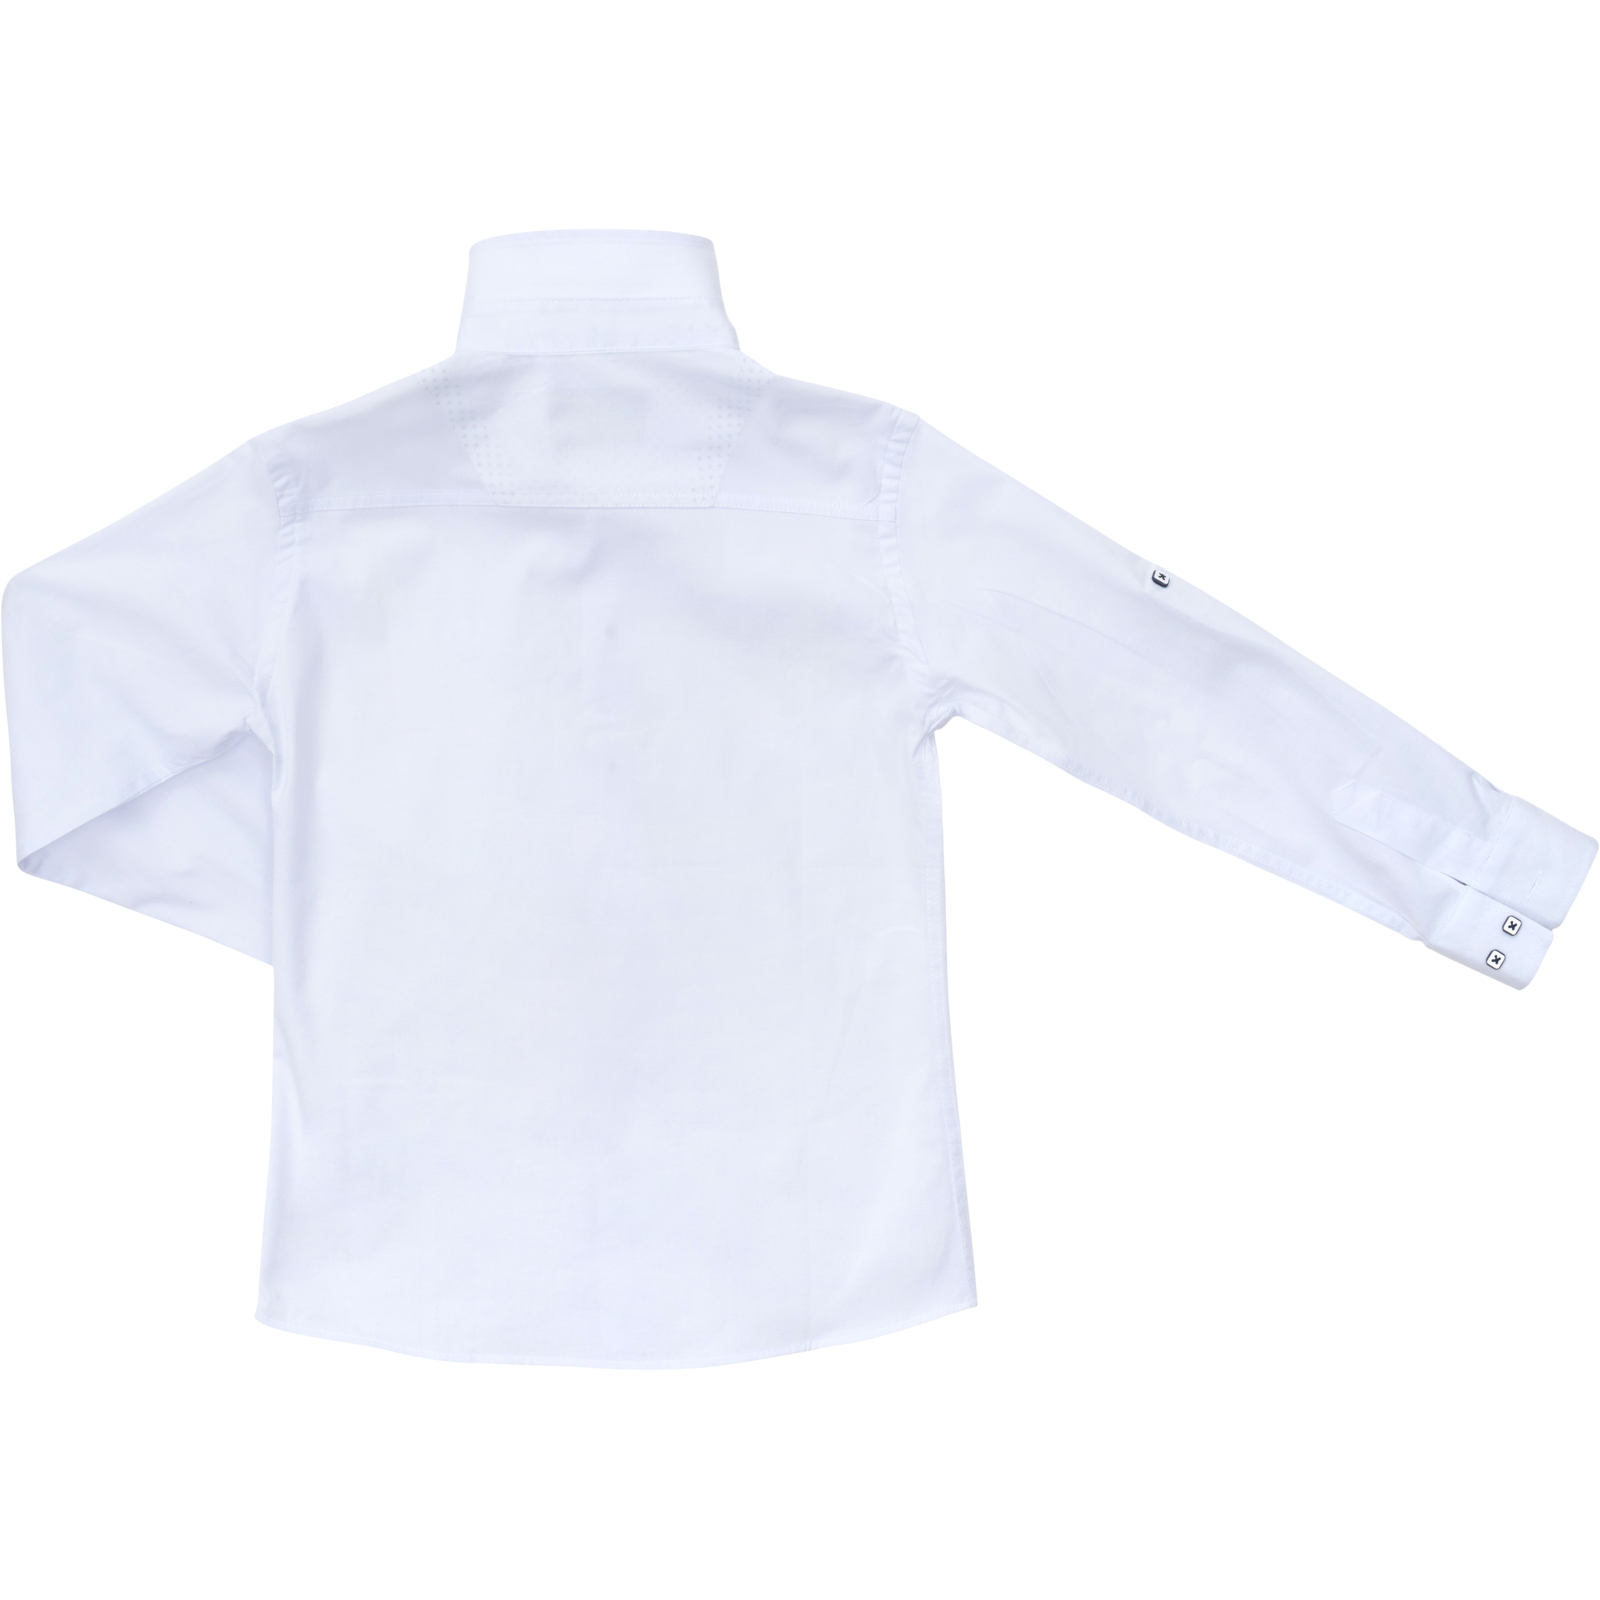 Рубашка A-Yugi для школы (18106-134B-white) изображение 2